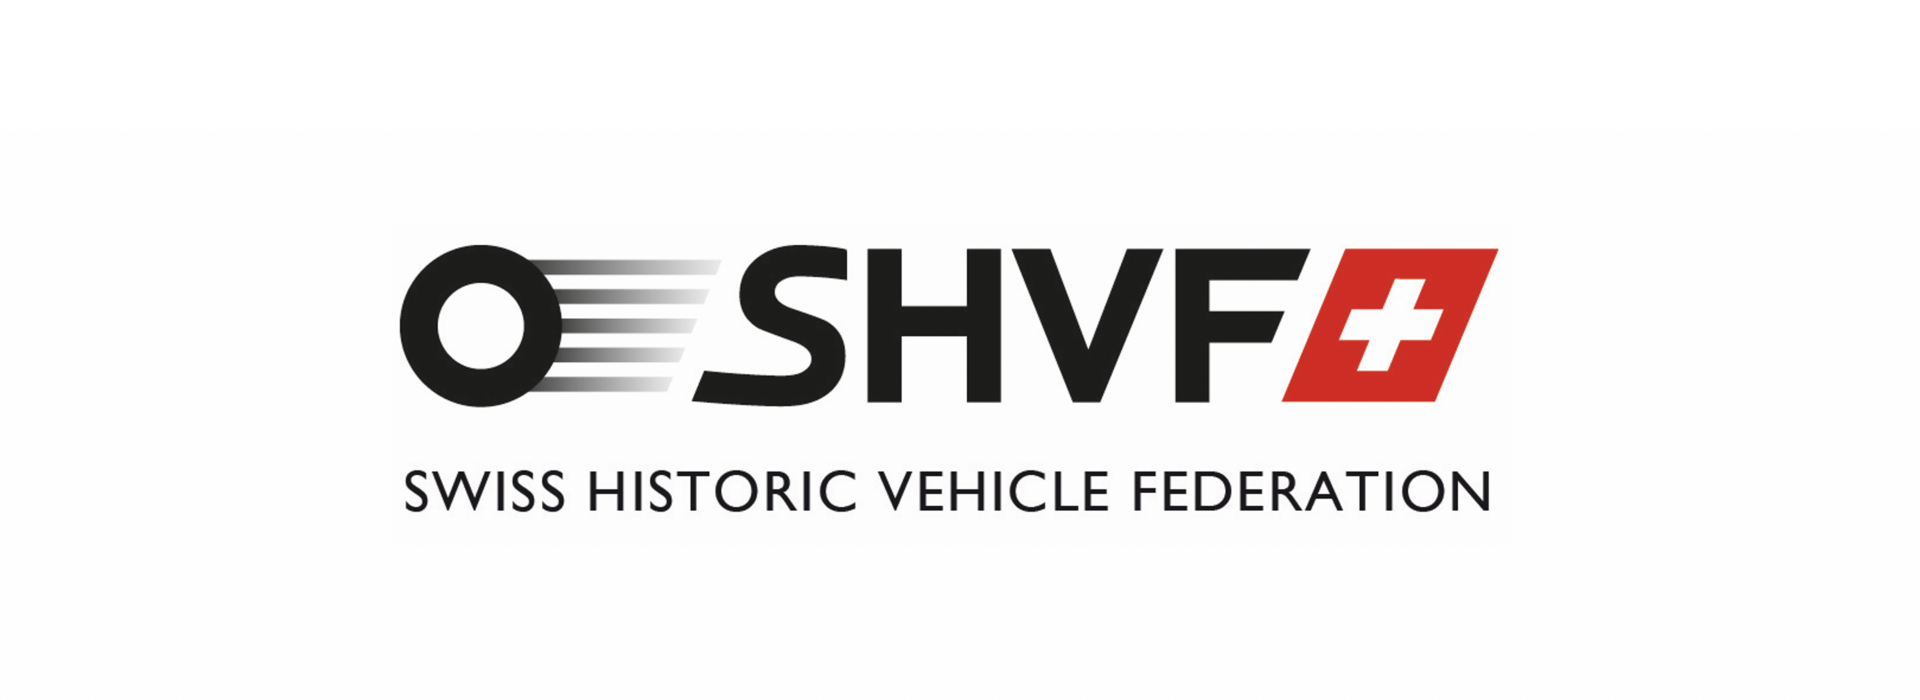 Swiss Historic Vehicle Federation